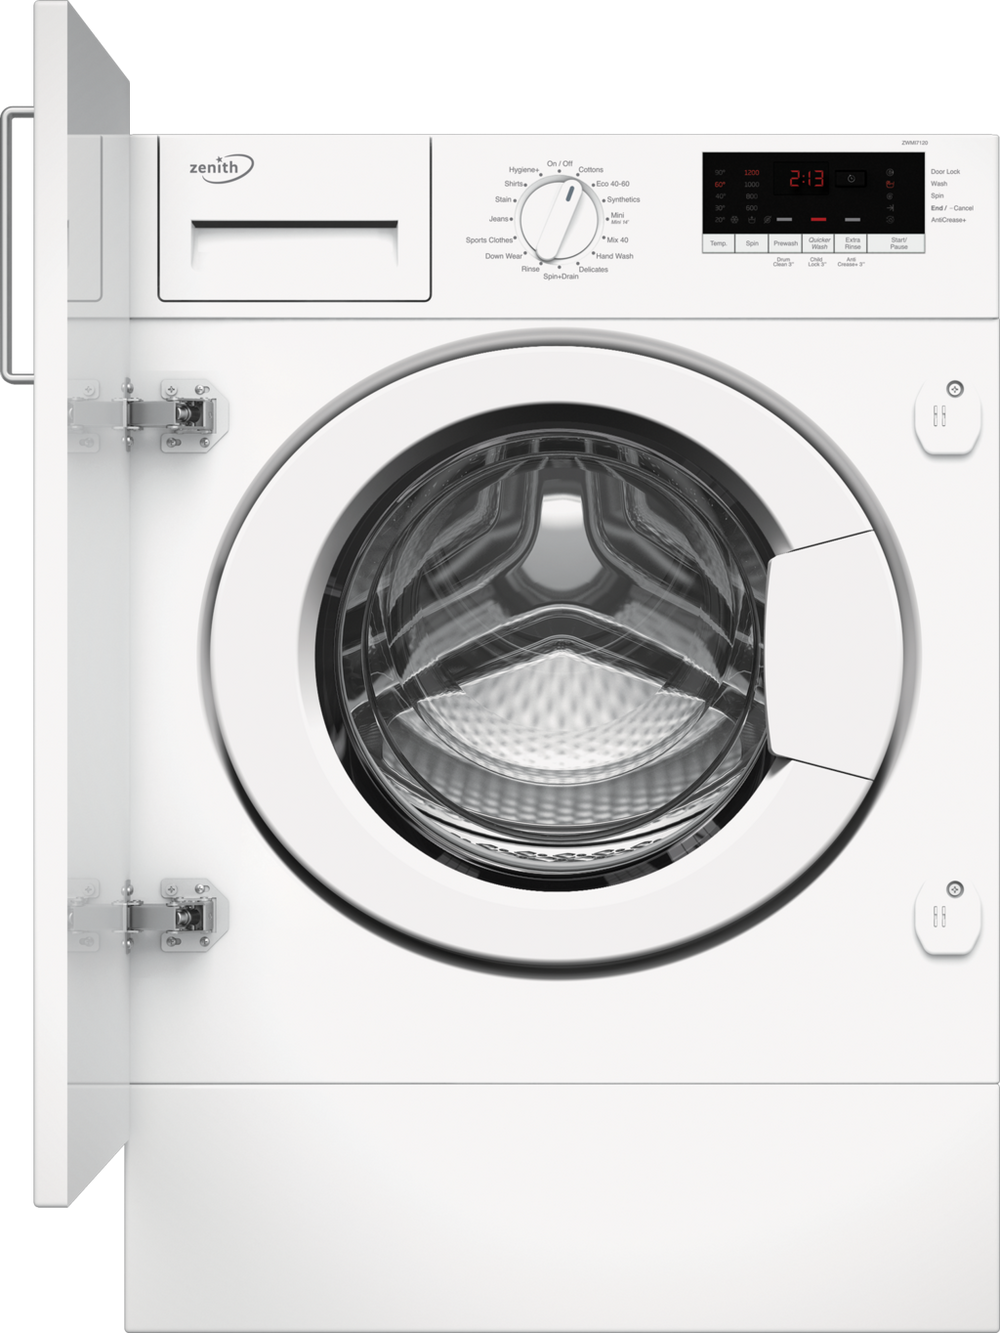 Zenith ZWMI7120 Built In 7kg 1200 Spin Washing Machine with Drum Clean - White